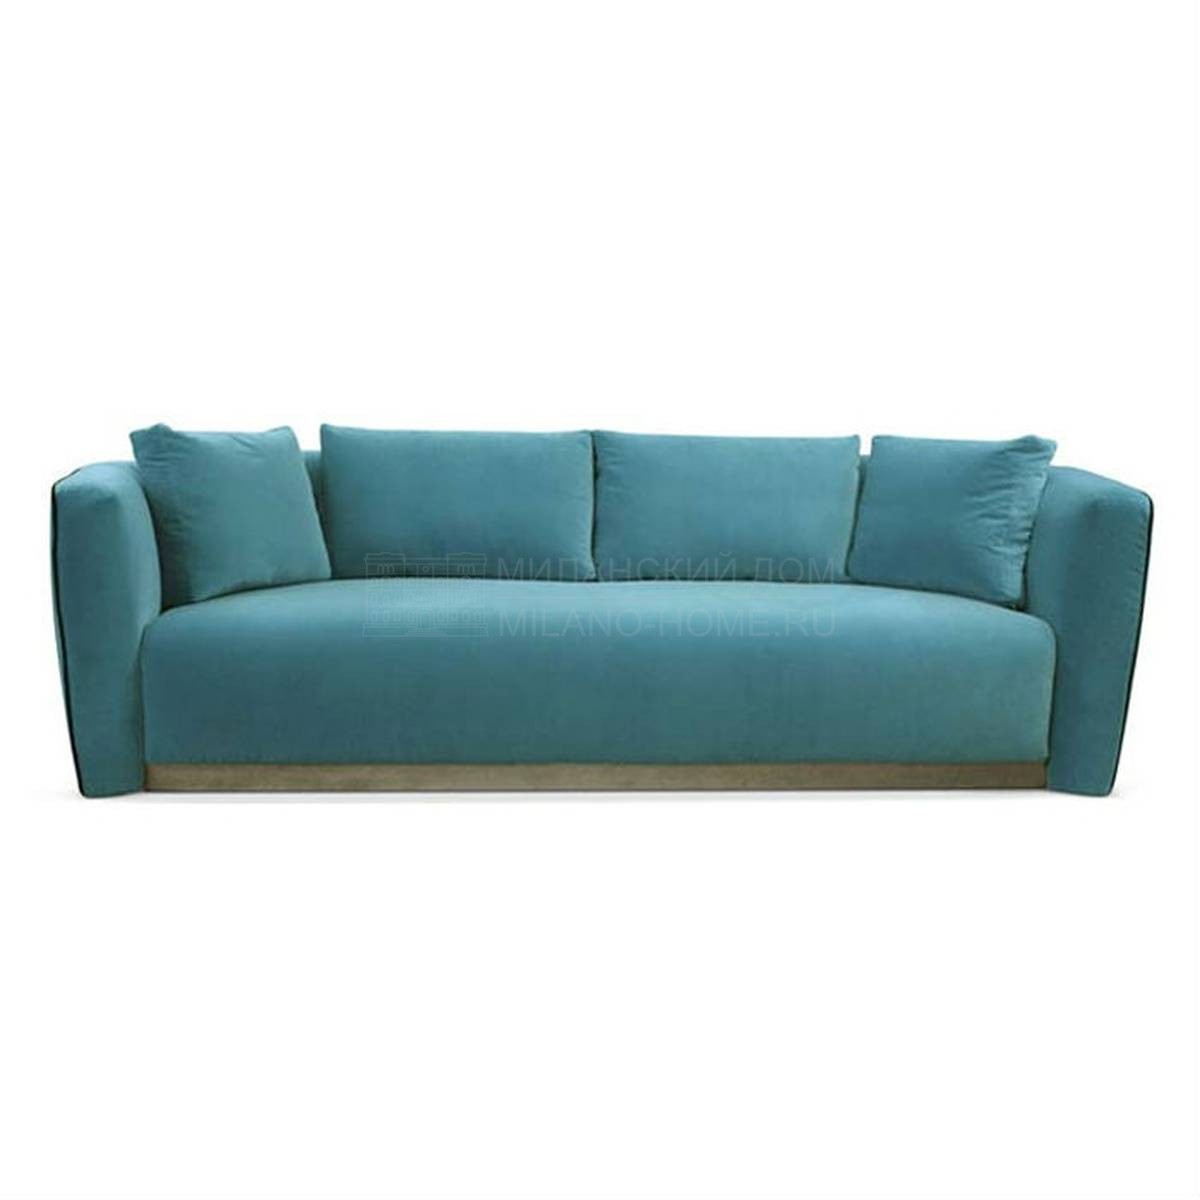 Прямой диван Cementina sofa из Италии фабрики SOFTHOUSE